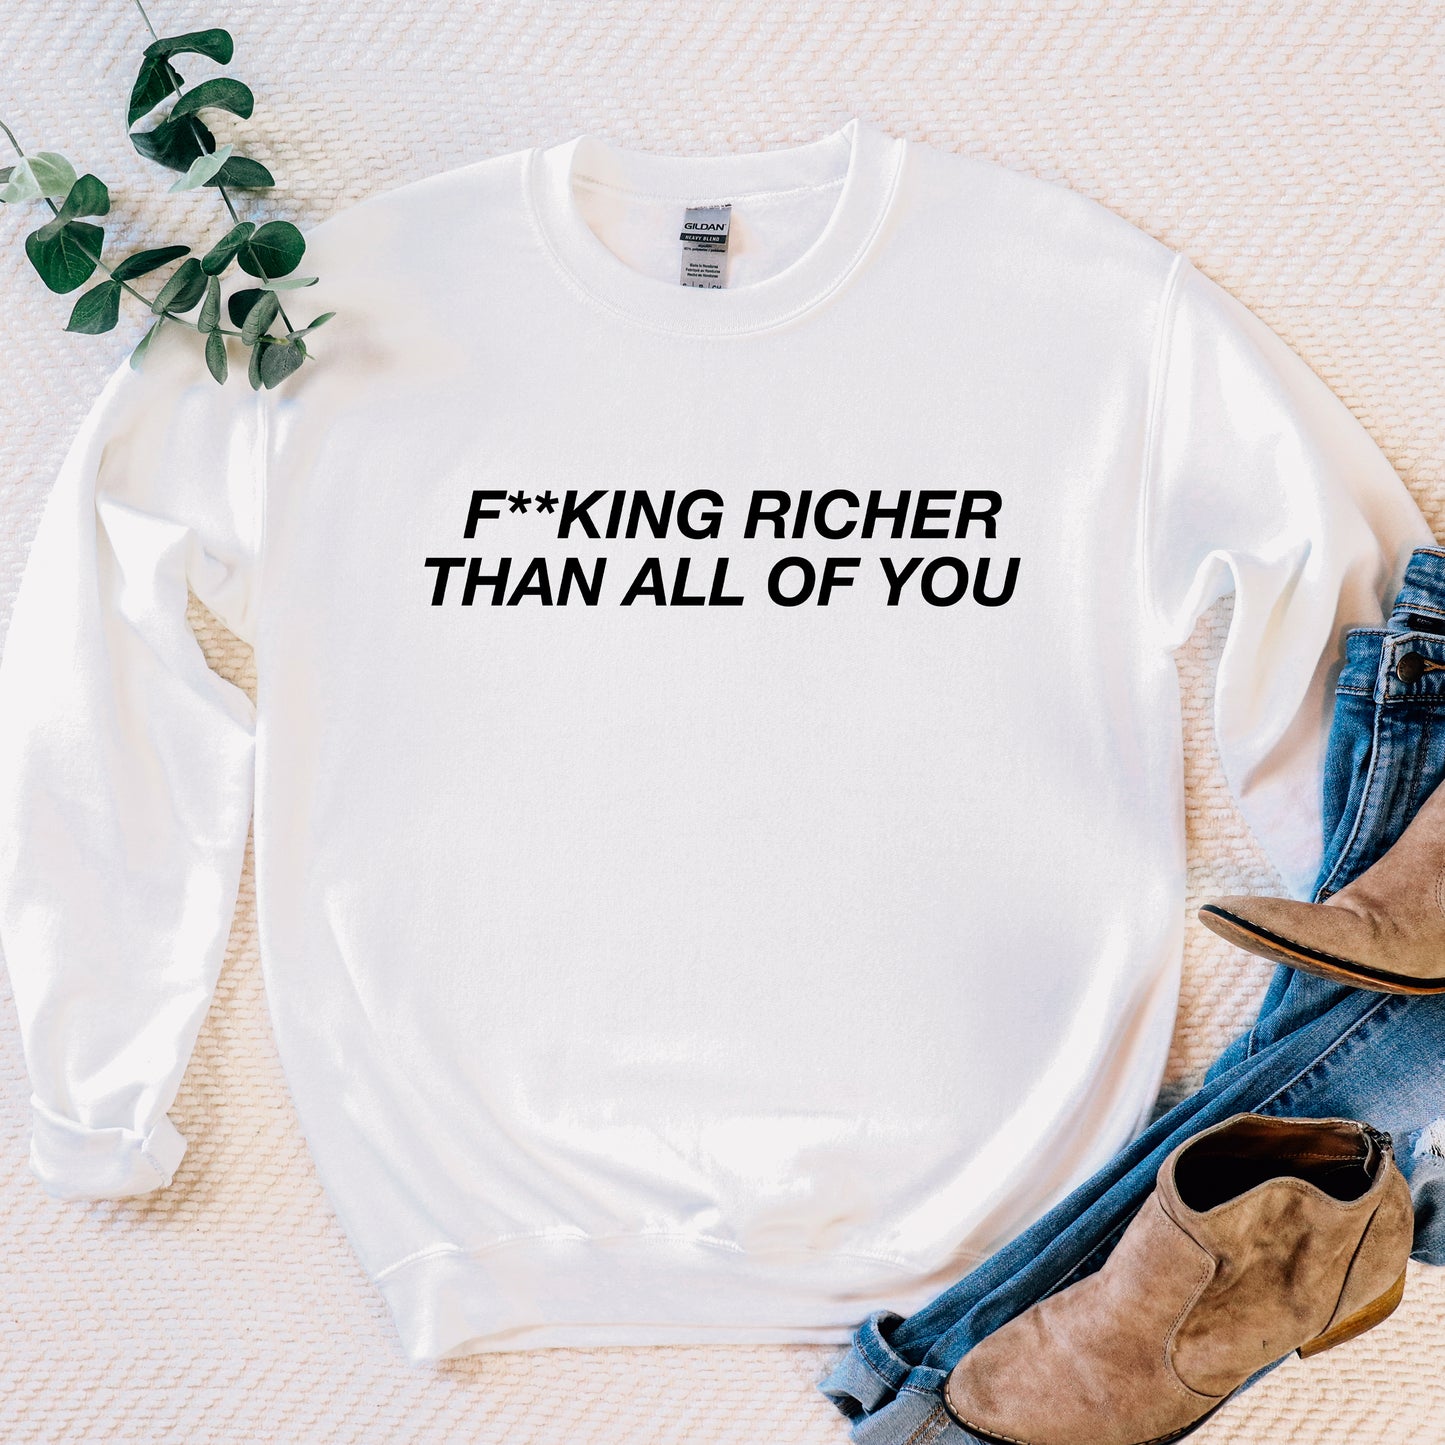 F**cking Richer Than All Of You | RHOSLC Sweatshirt